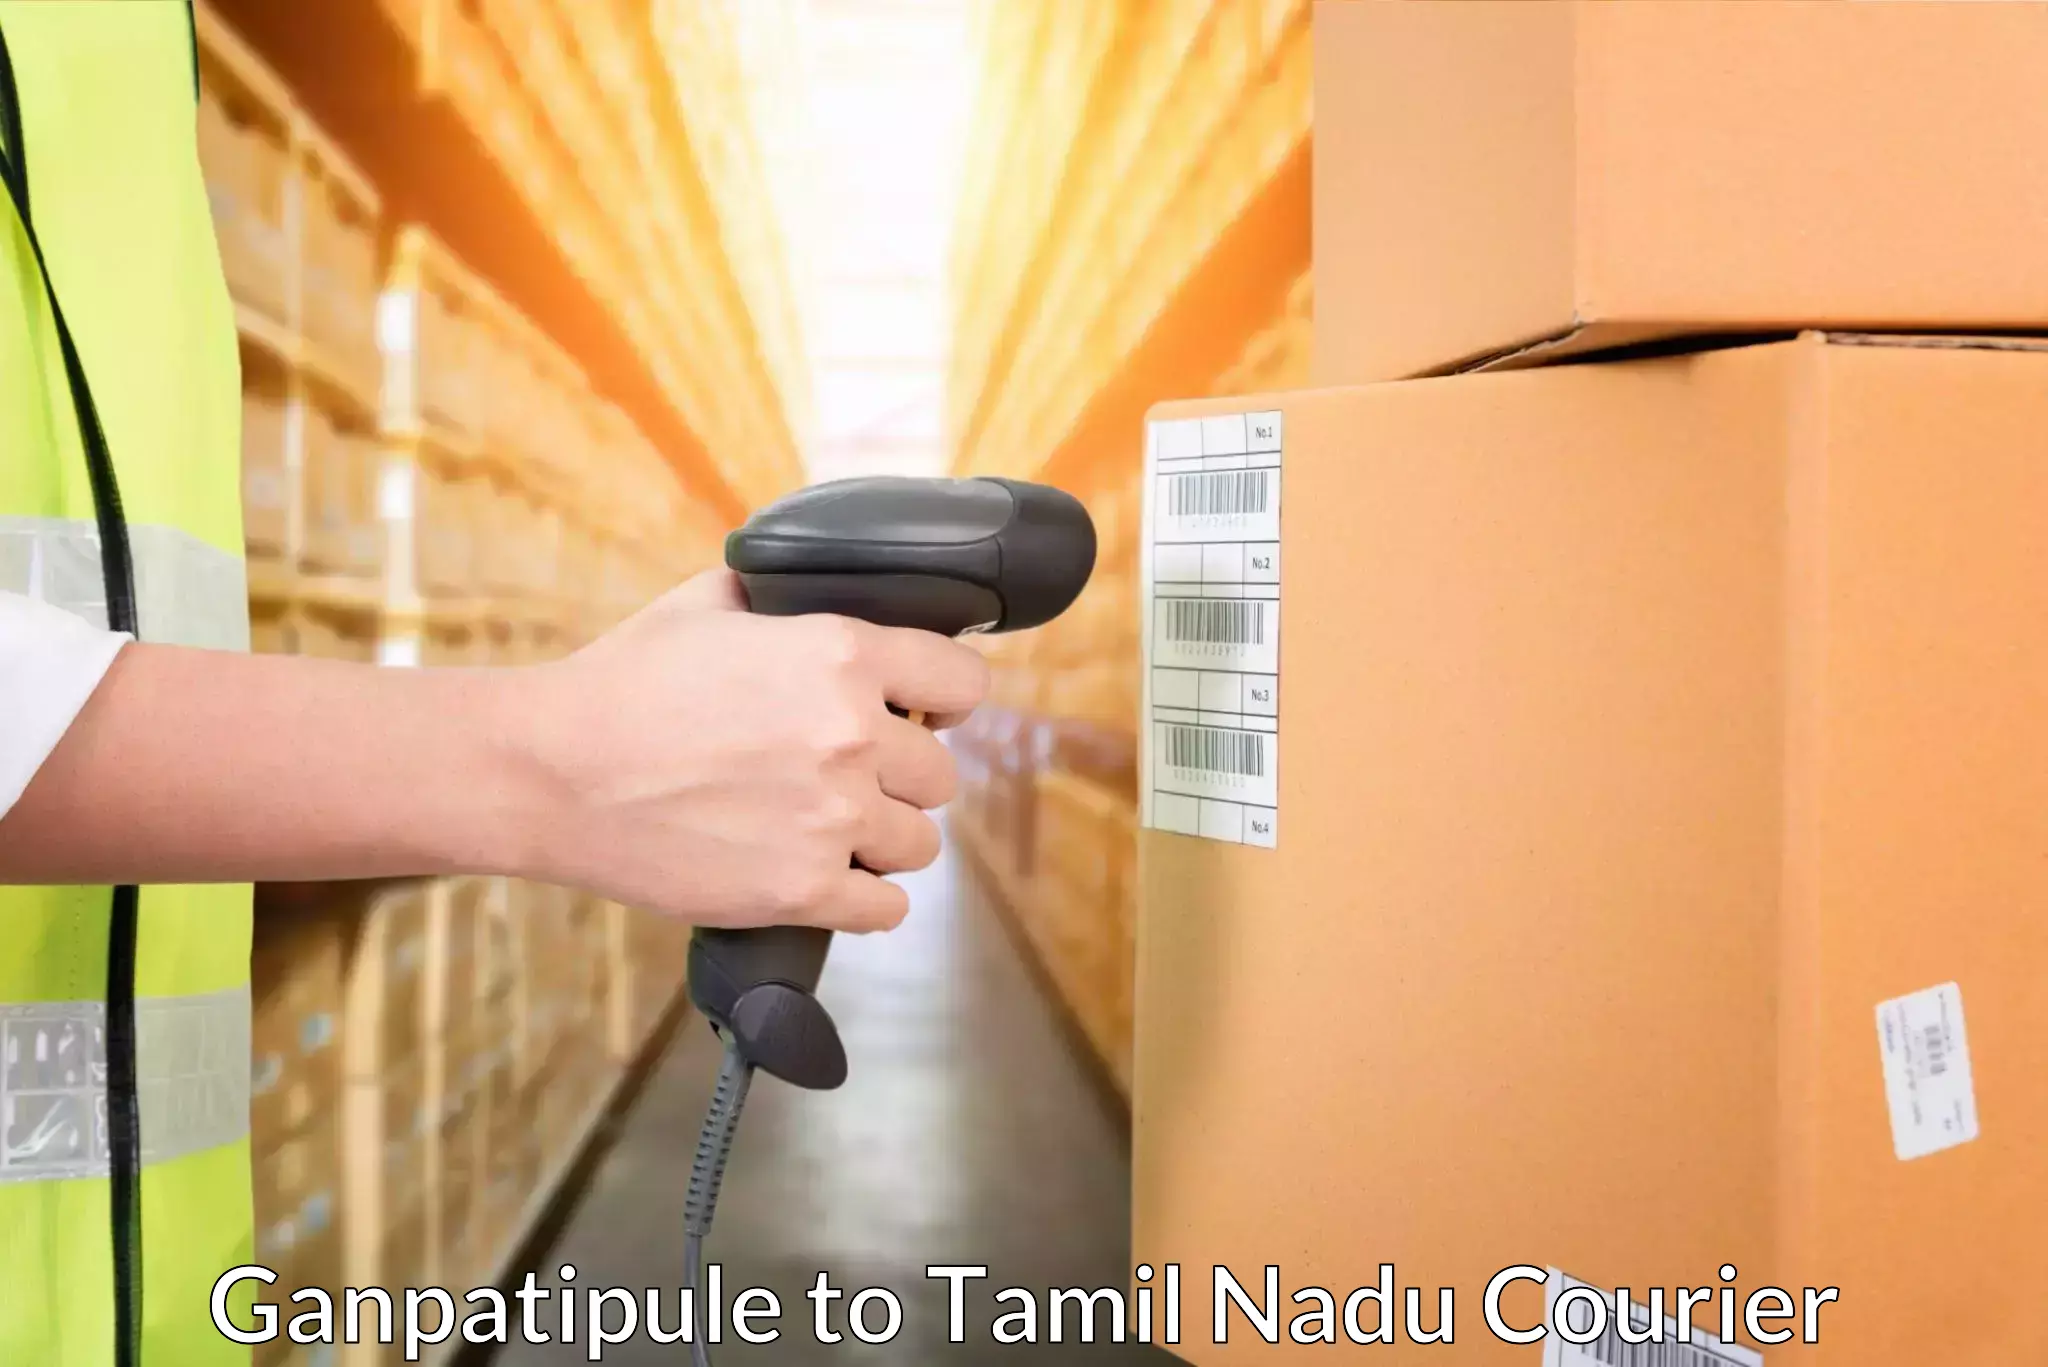 Cash on delivery service Ganpatipule to Manonmaniam Sundaranar University Tirunelveli